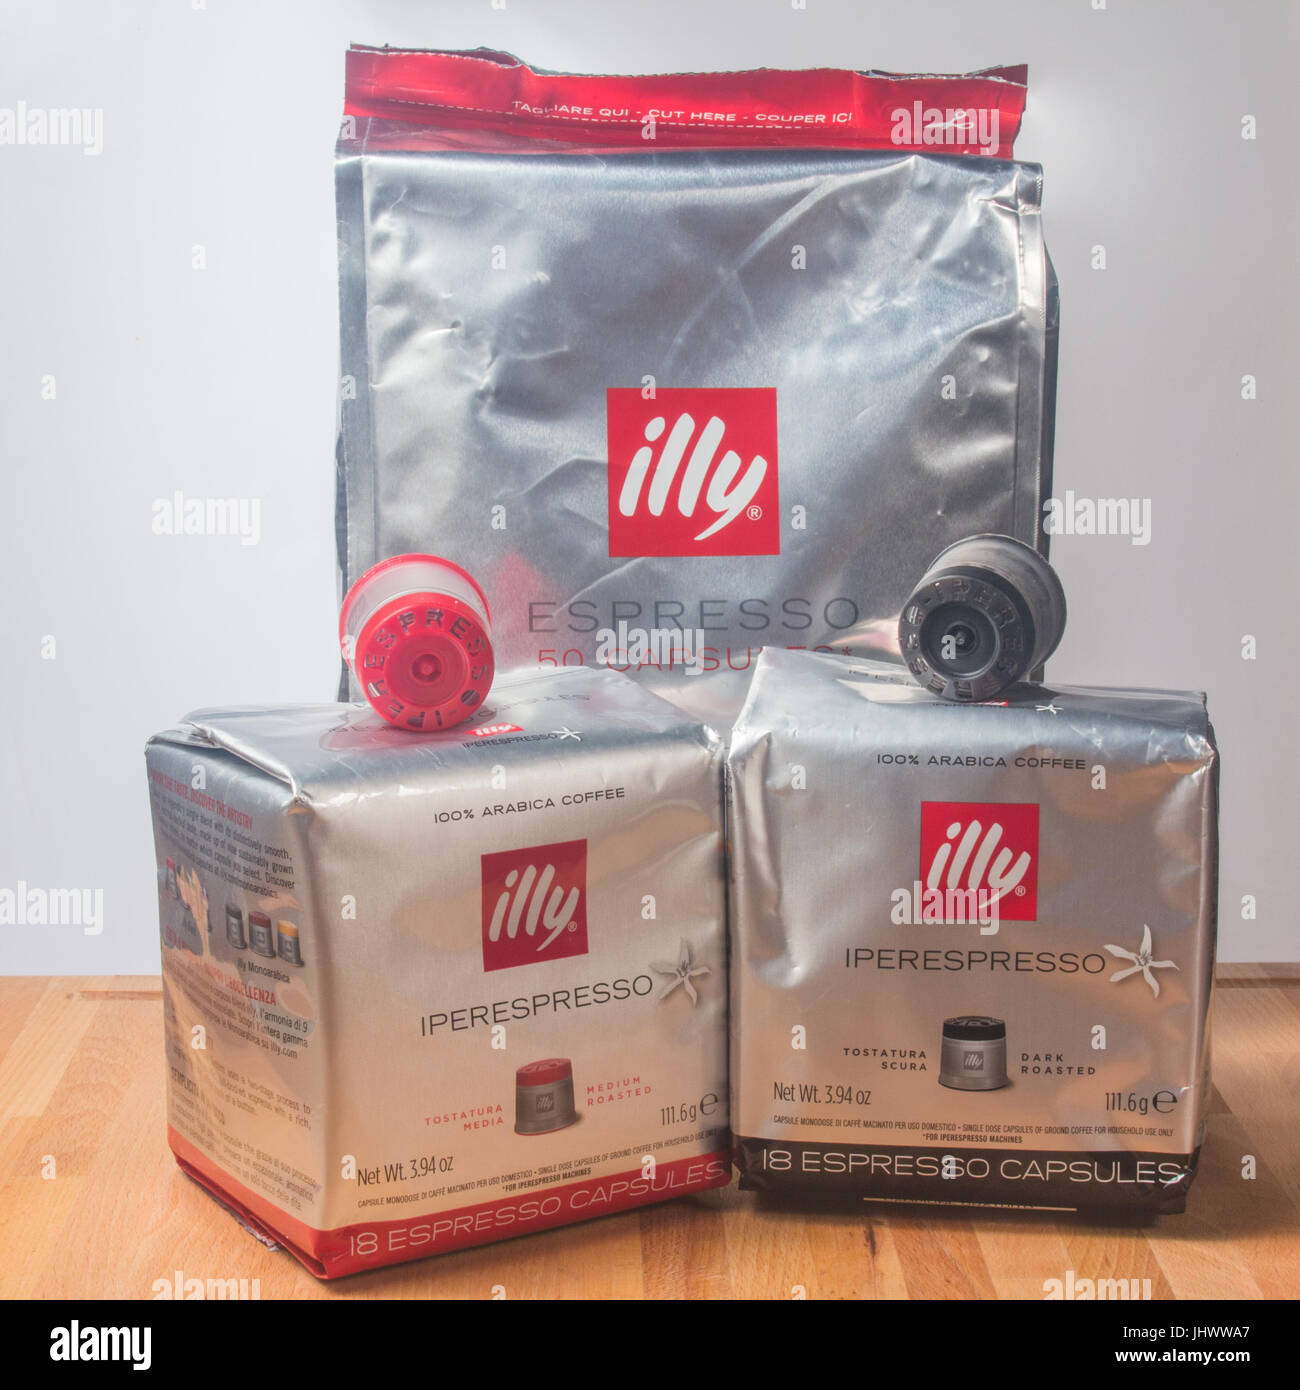 Illy coffe capsules Stock Photo - Alamy